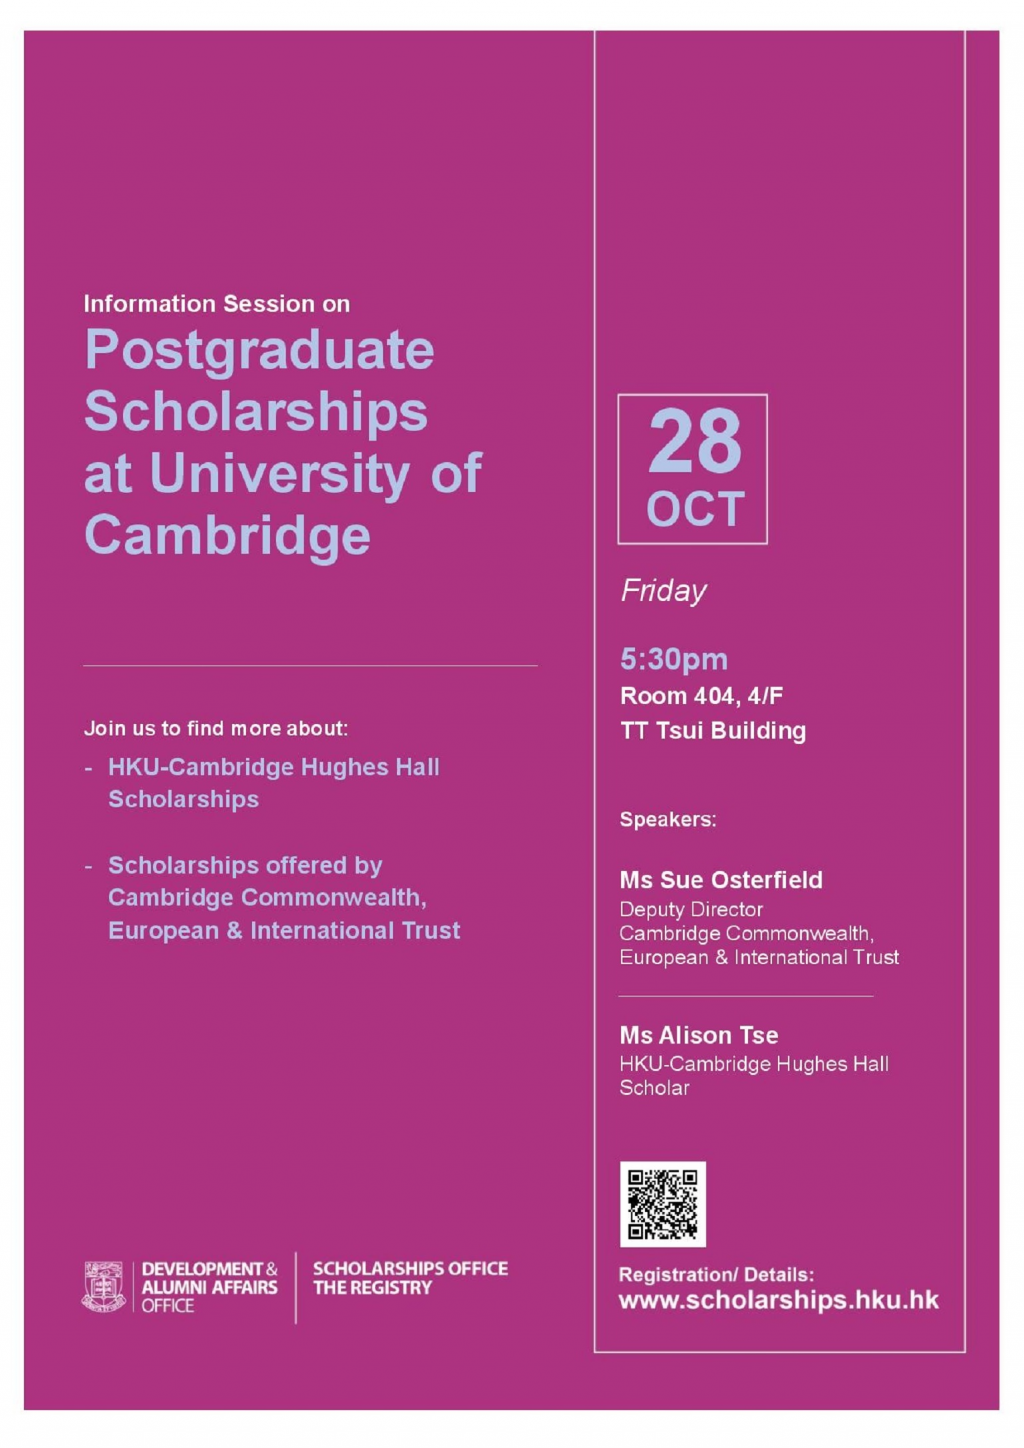 Information Session on Postgraduate Scholarships at University of Cambridge 